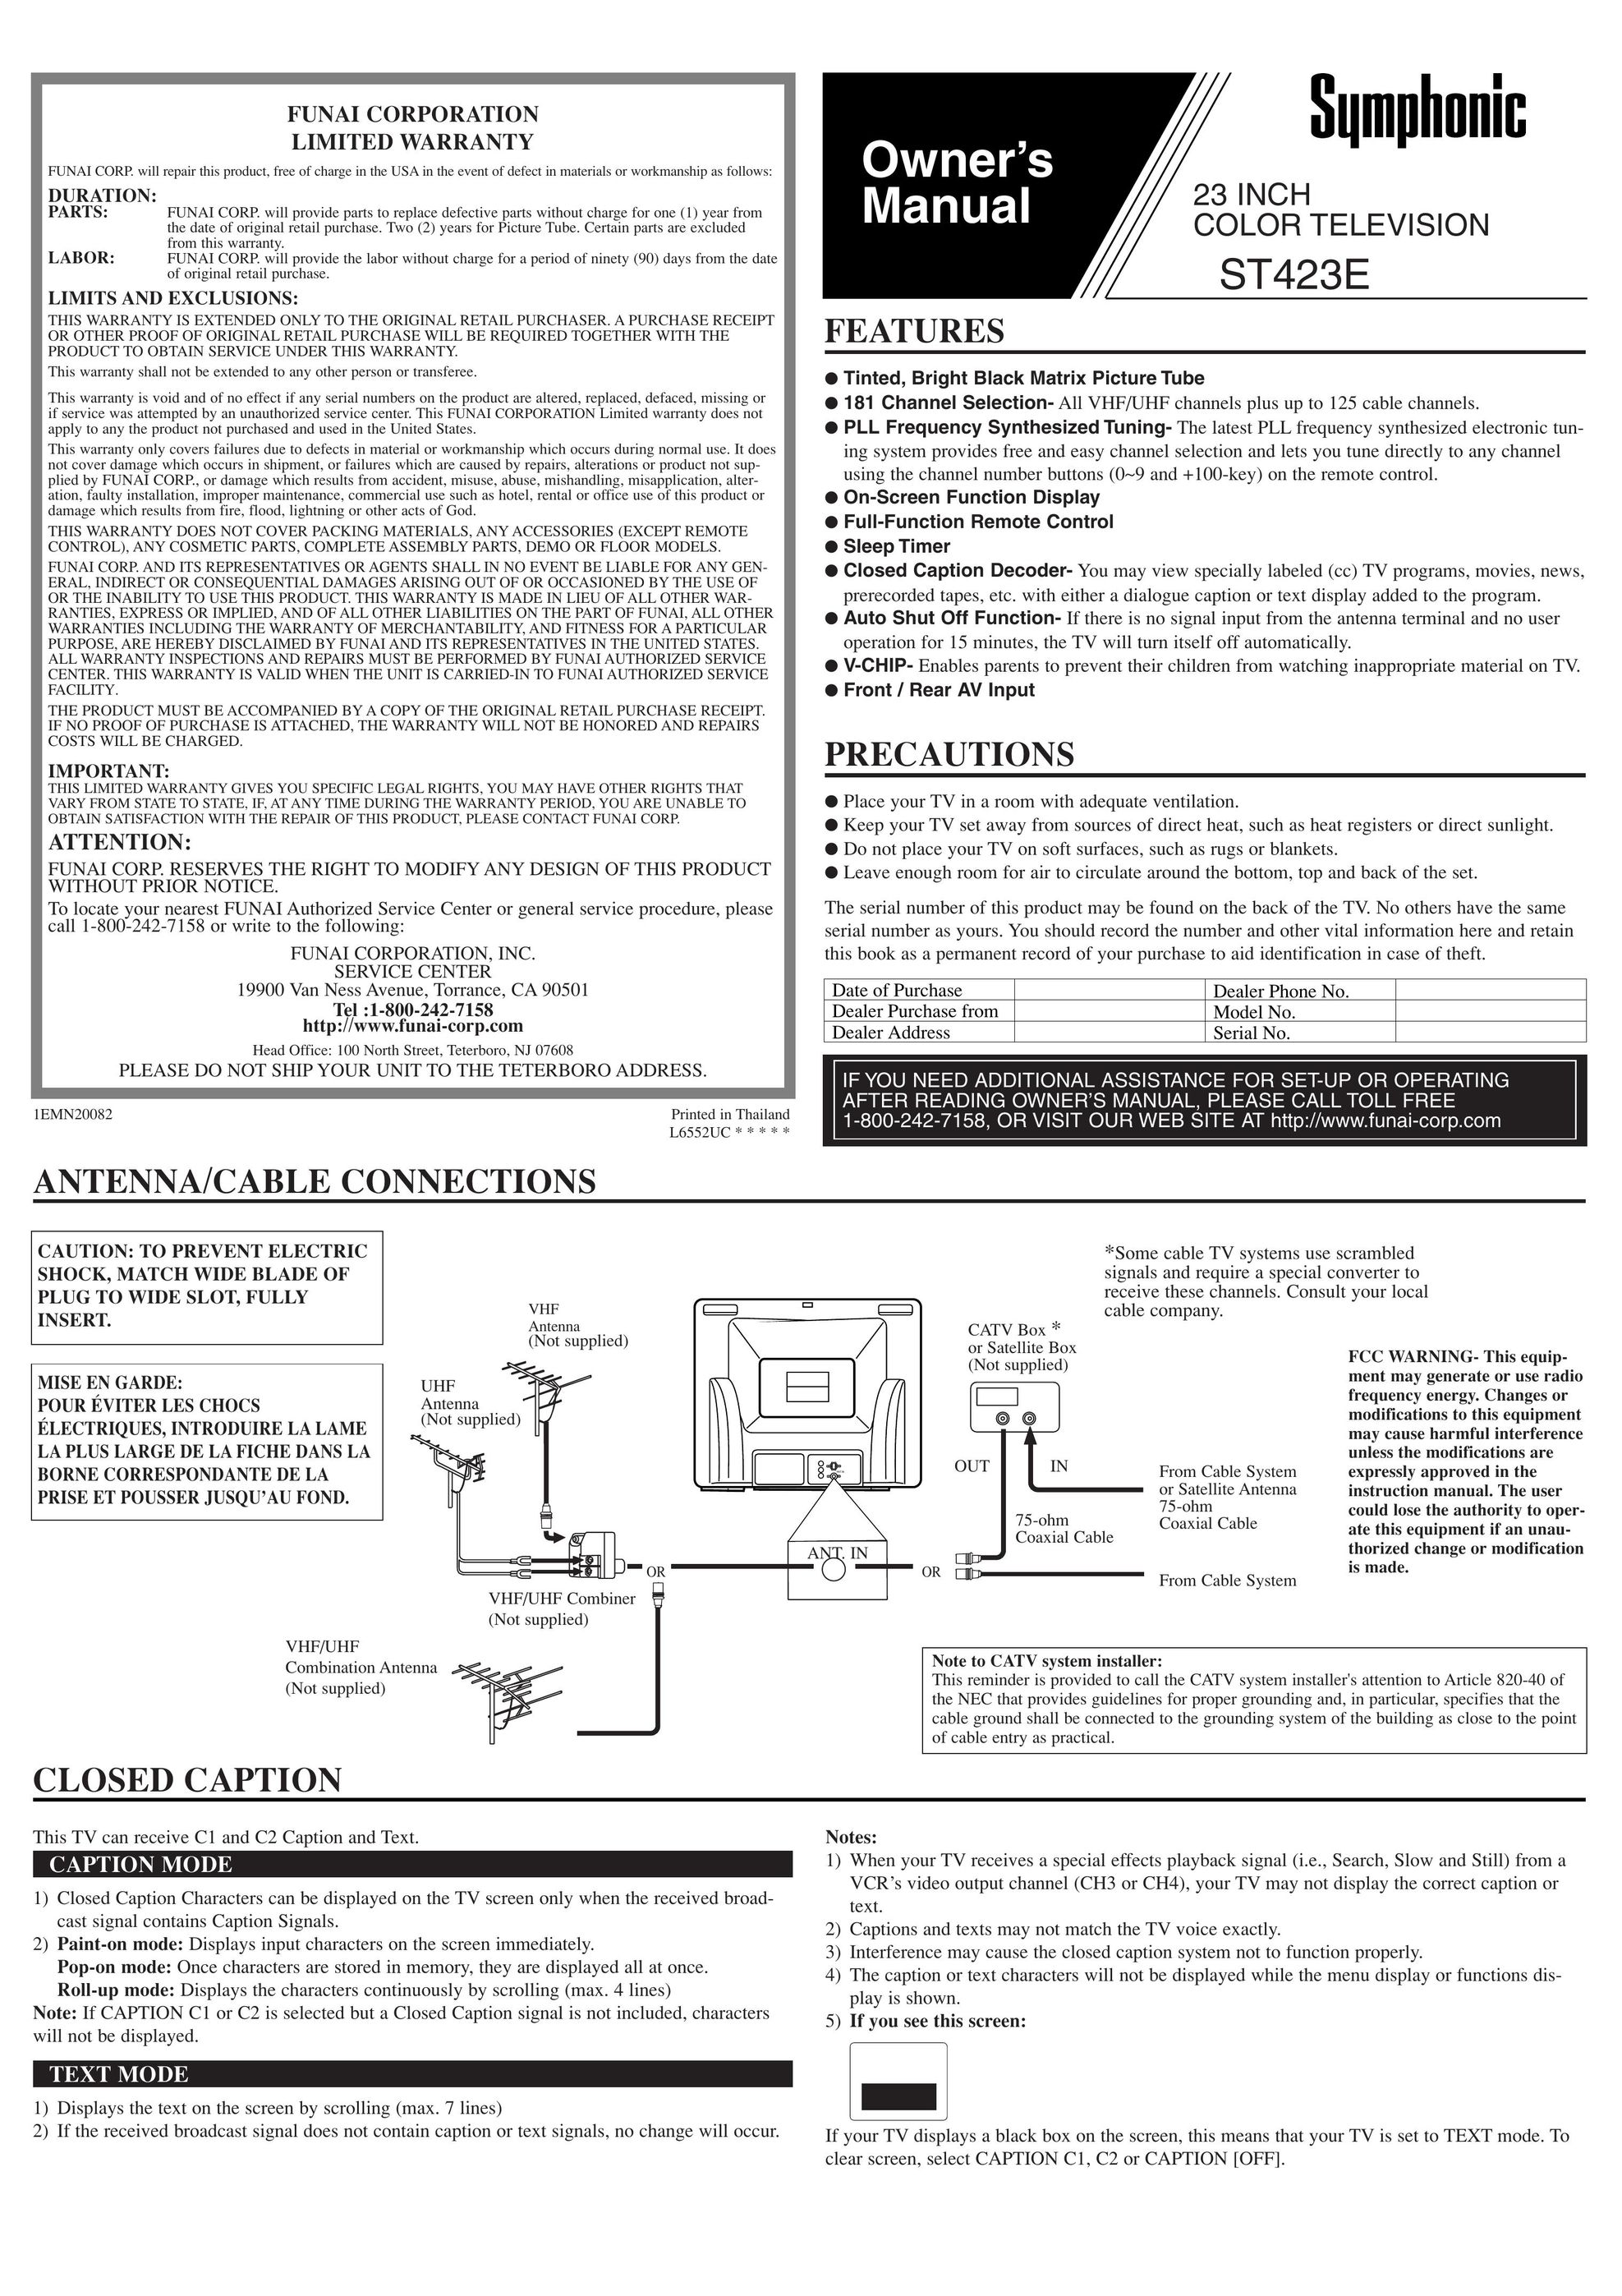 Symphonic ST423E CRT Television User Manual